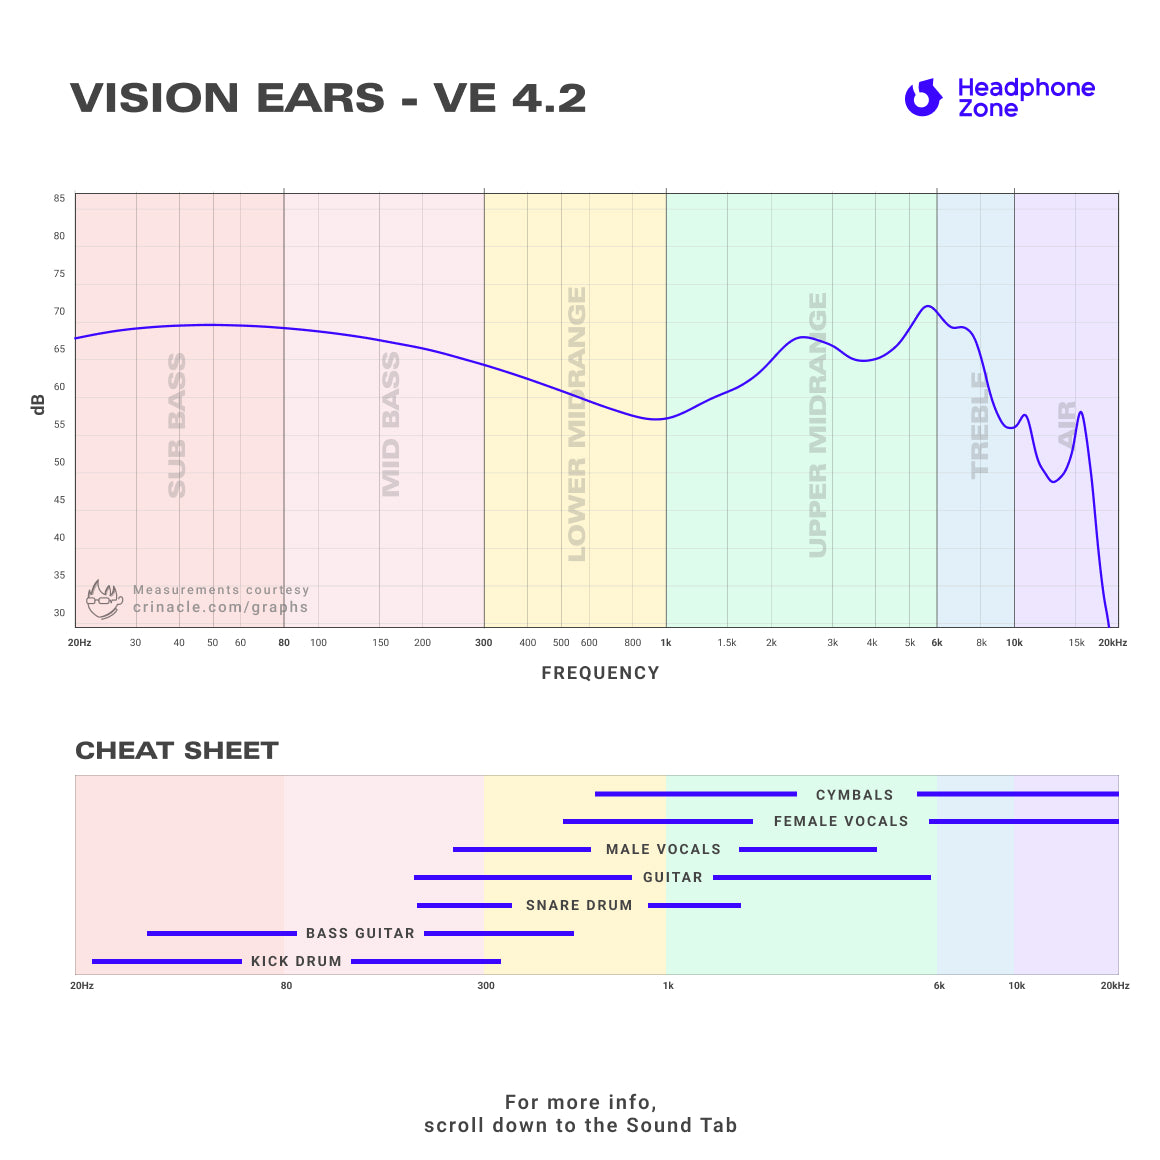 Vision Ears - VE 4.2